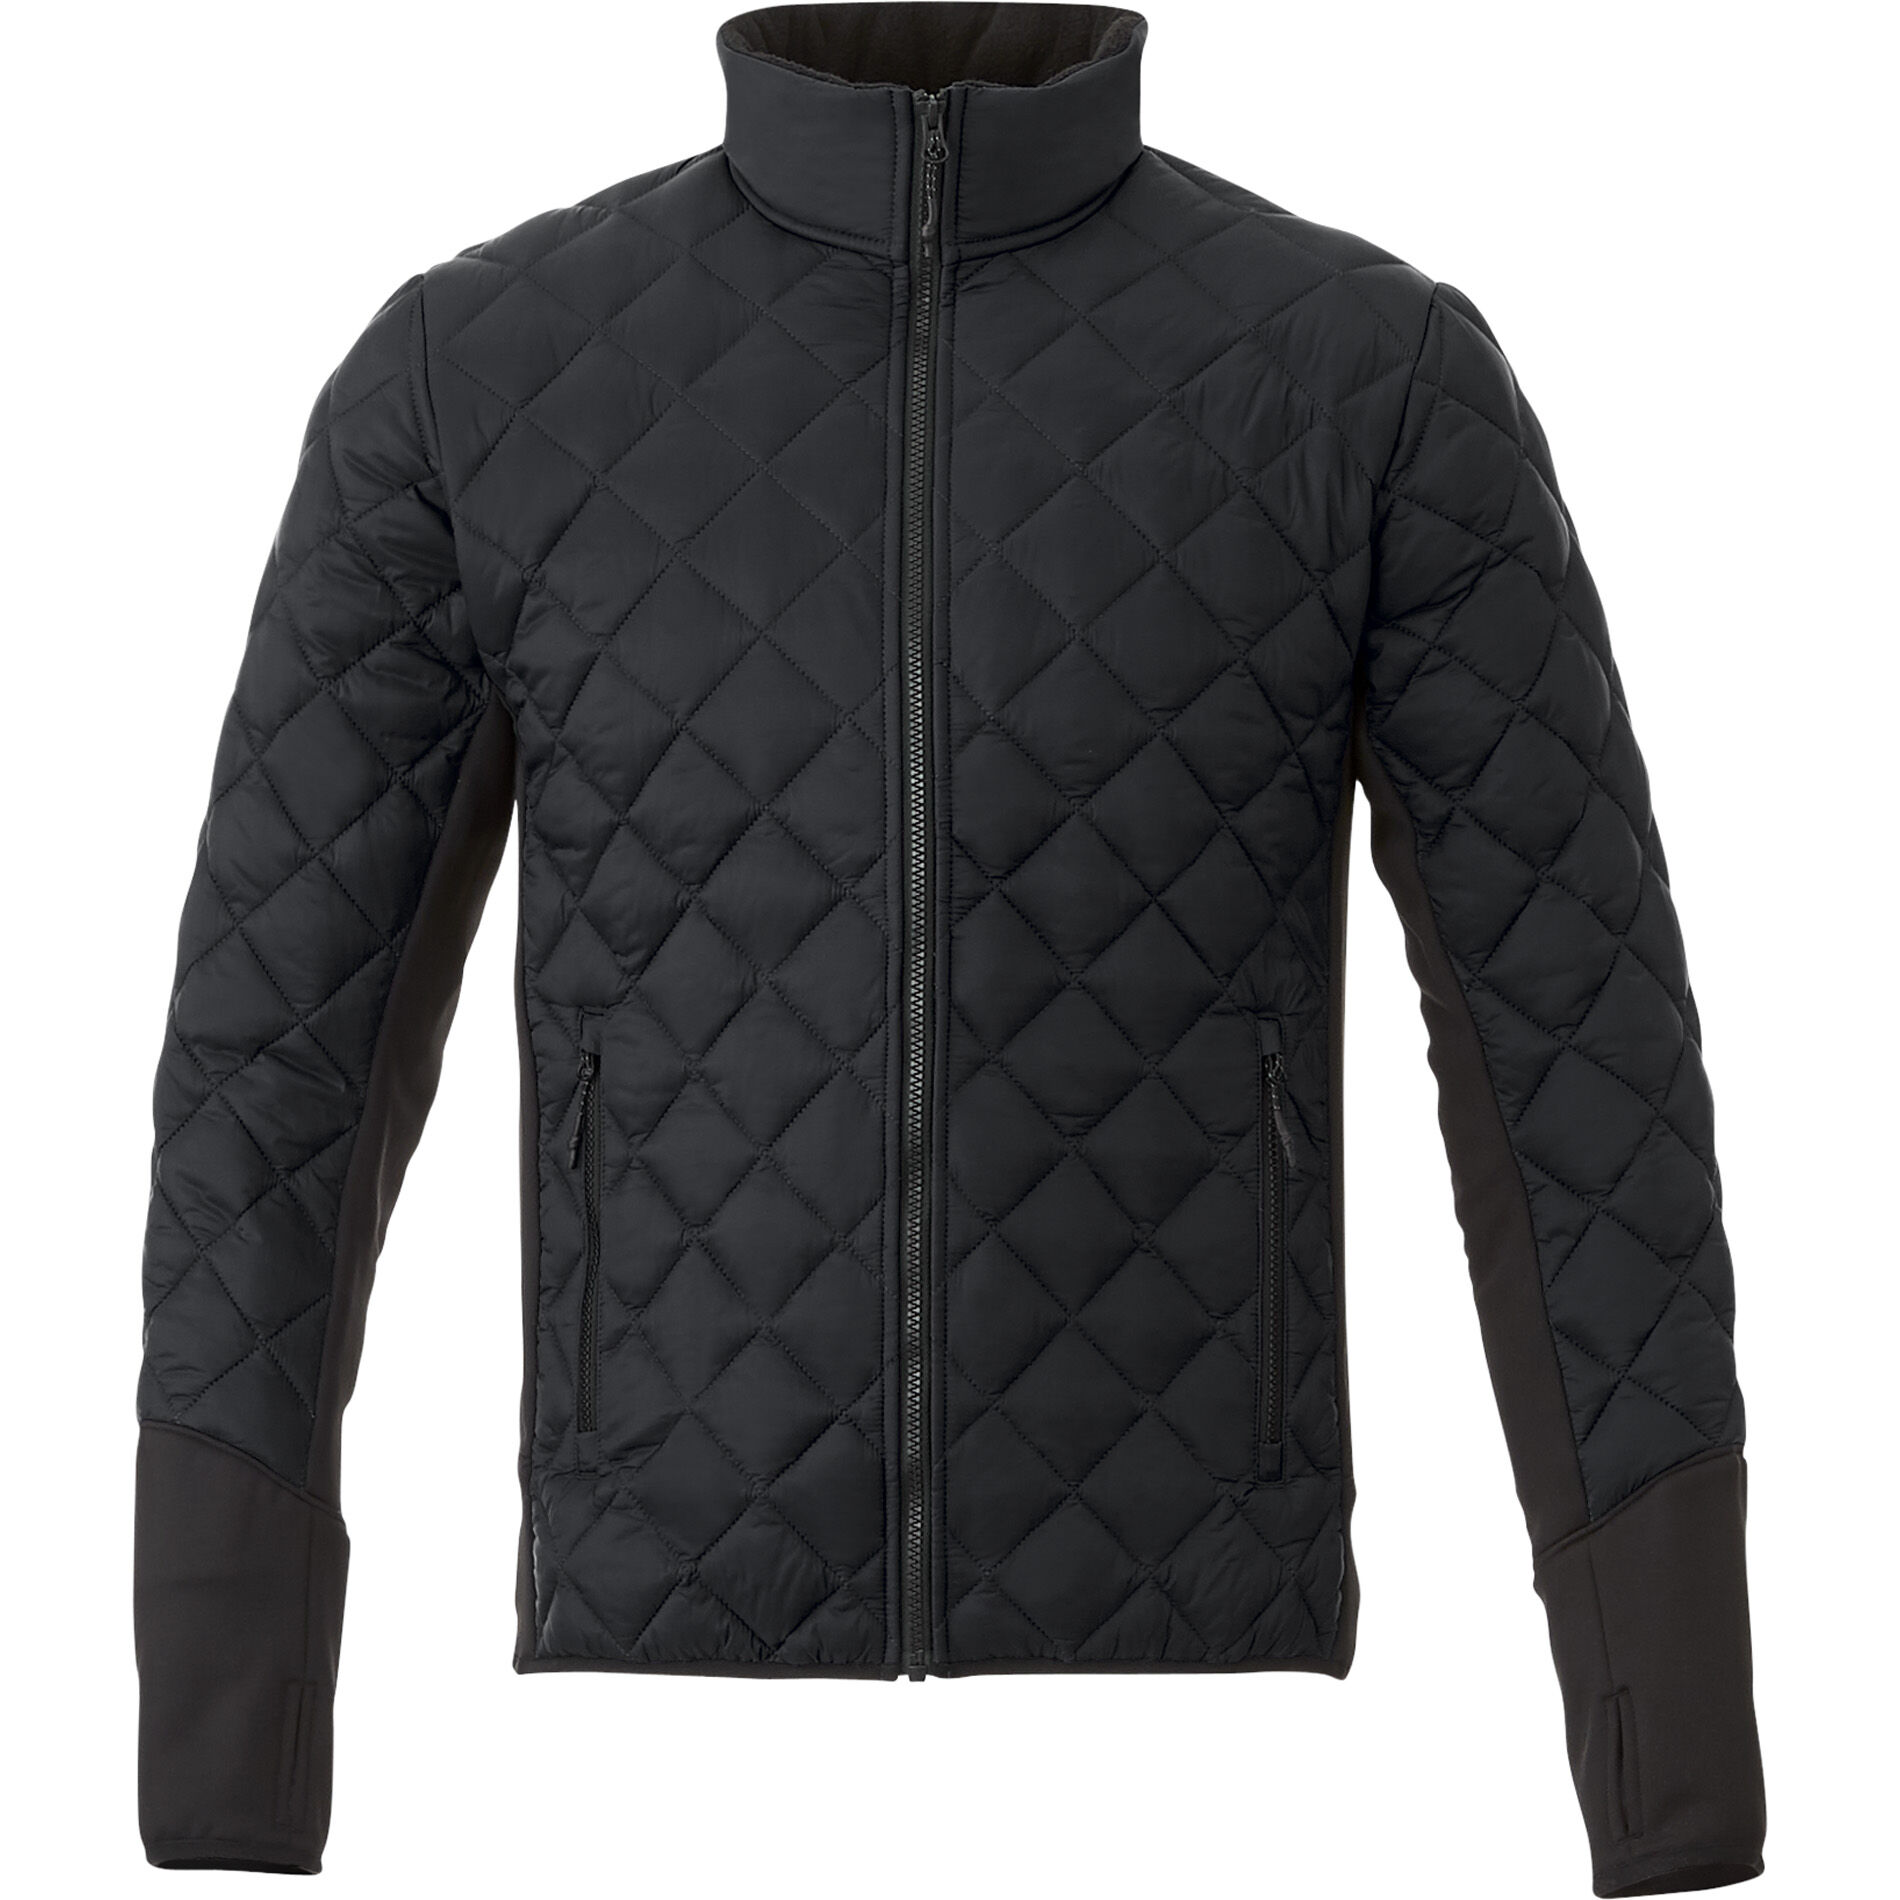 Branded Rougemont Hybrid Insulated Jacket (Male) Black/Black